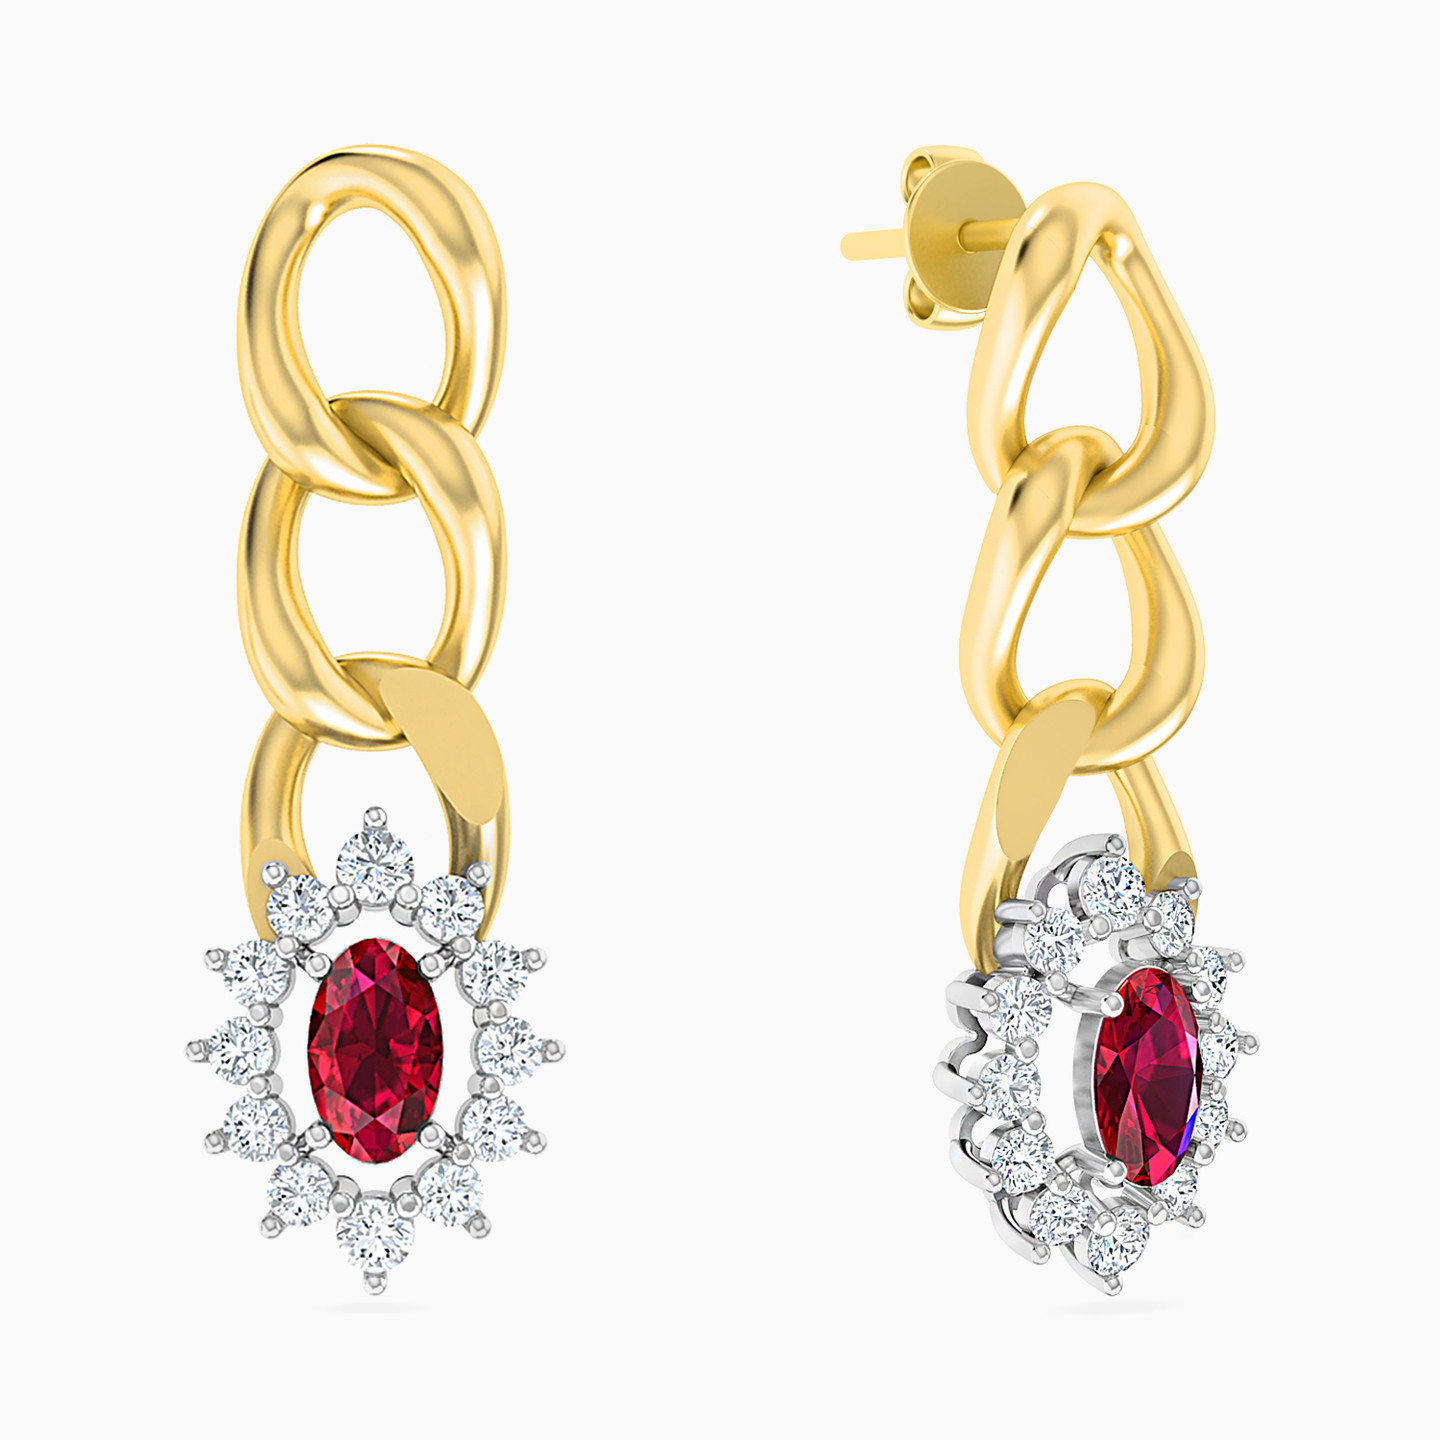 18K Gold Diamond & Colored Stones Drop Earrings - 2